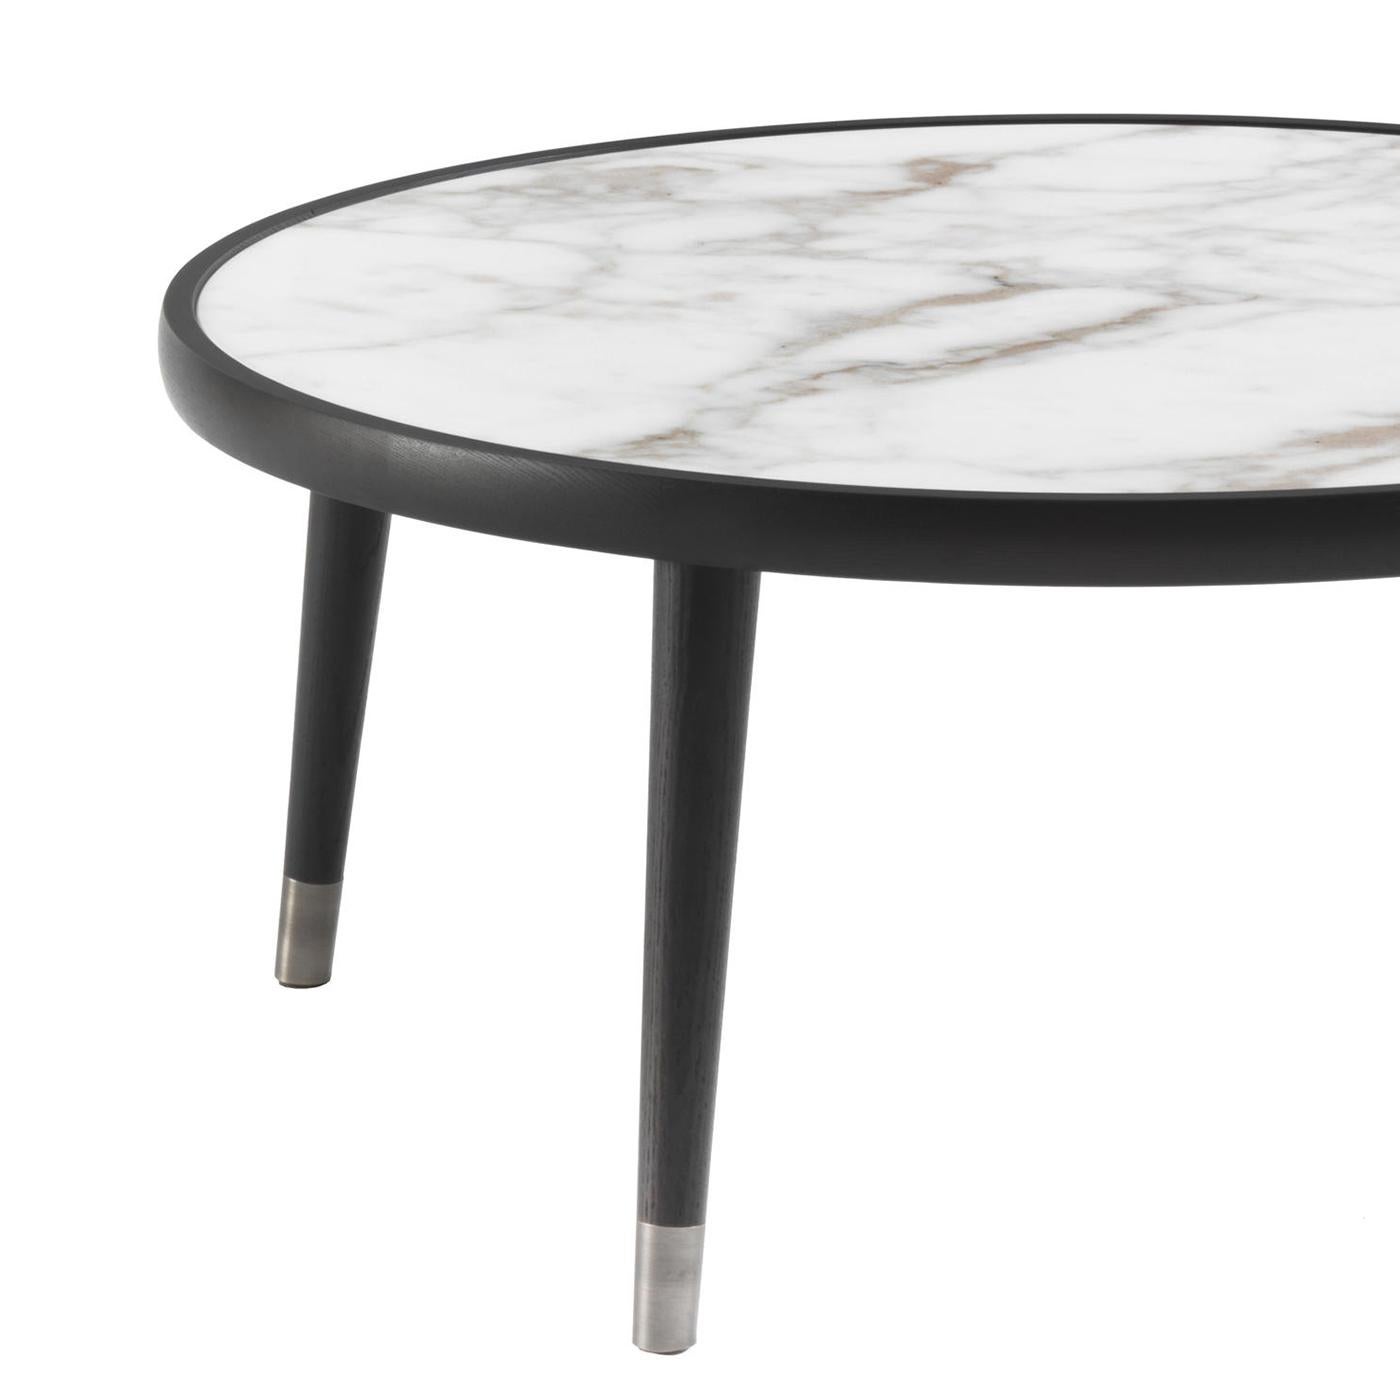 Coffee table domio marble.